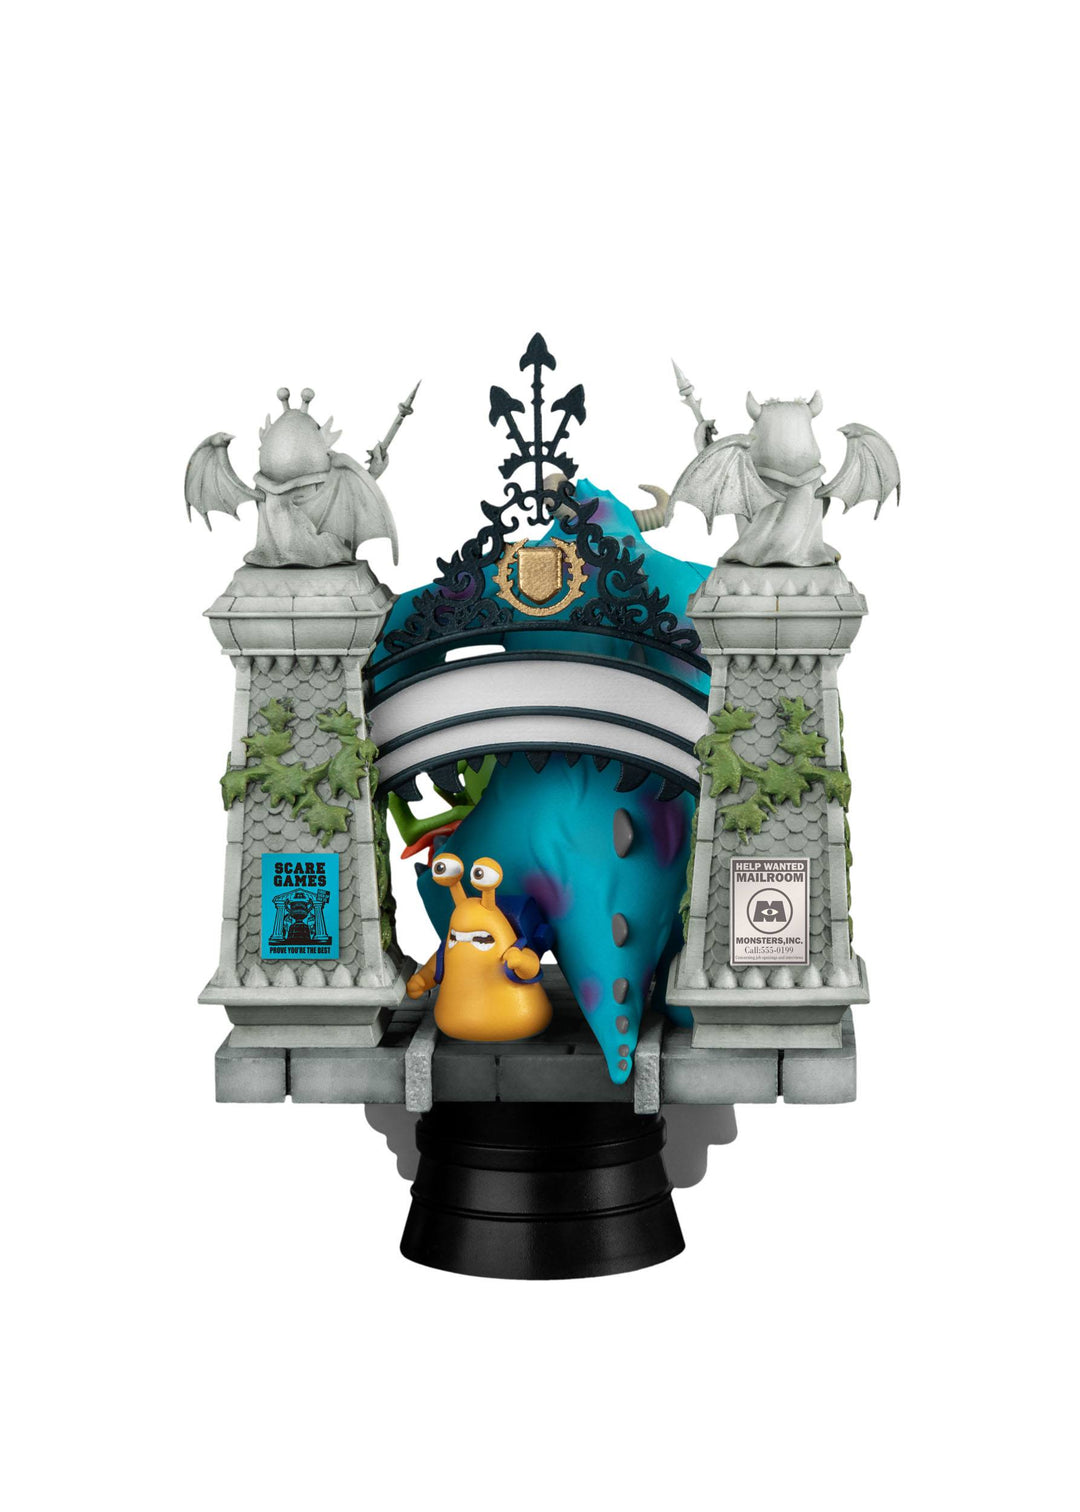 Beast Kingdom Disney Pixar Monsters University Diorama Stage D-Stage Figure Statue